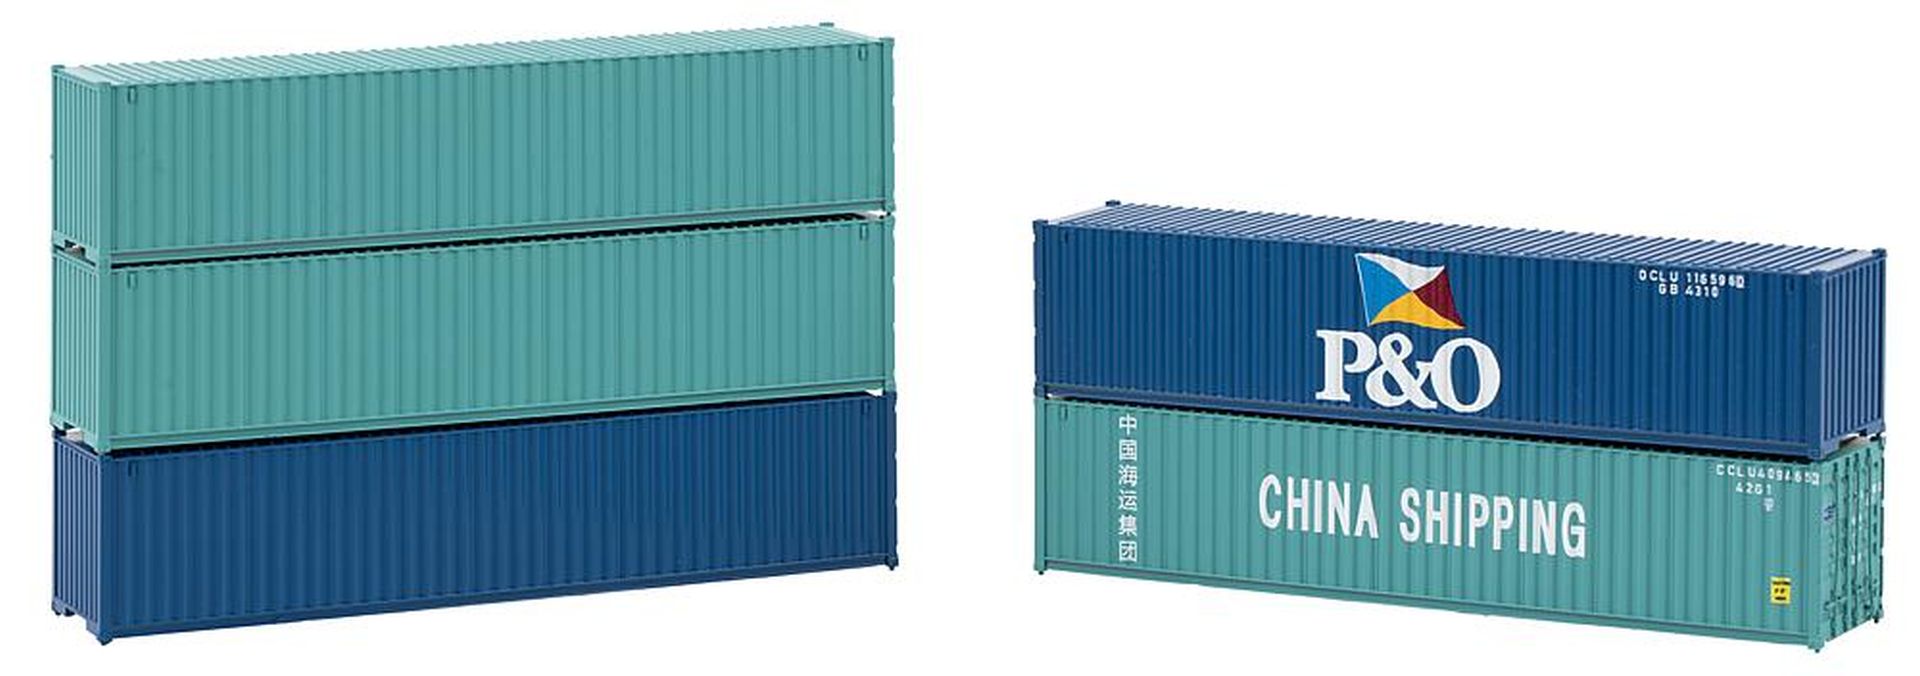 Faller 182151 - 40' Container, 5er-Set